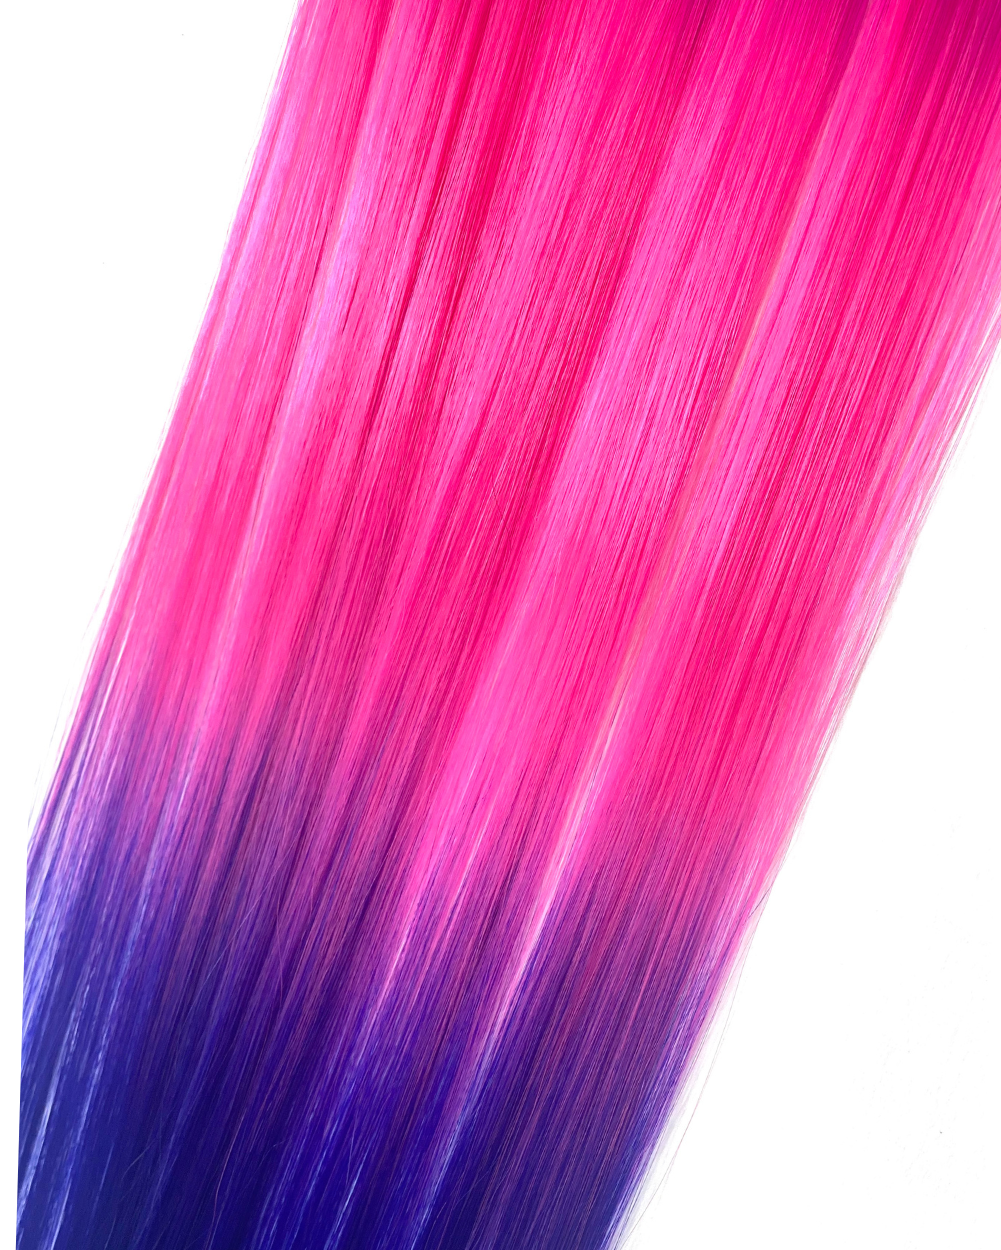 Sunrise - Pink Purple Ombré Clip-In Hair Extensions - Lunautics Clip-In Extensions